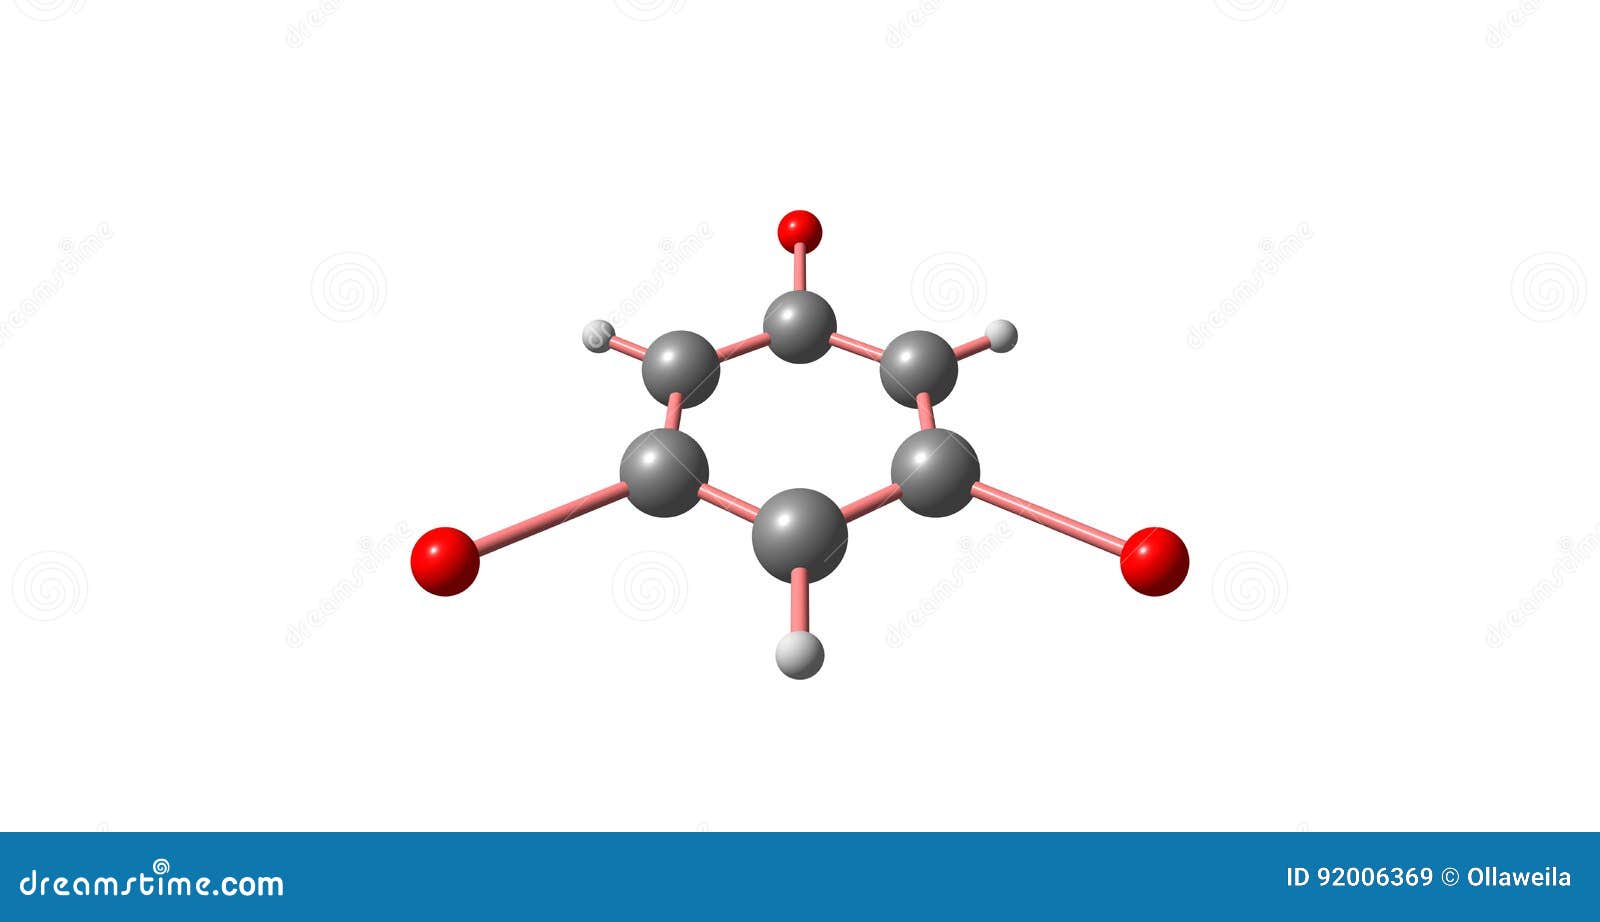 1 3 5 tribromobenzene